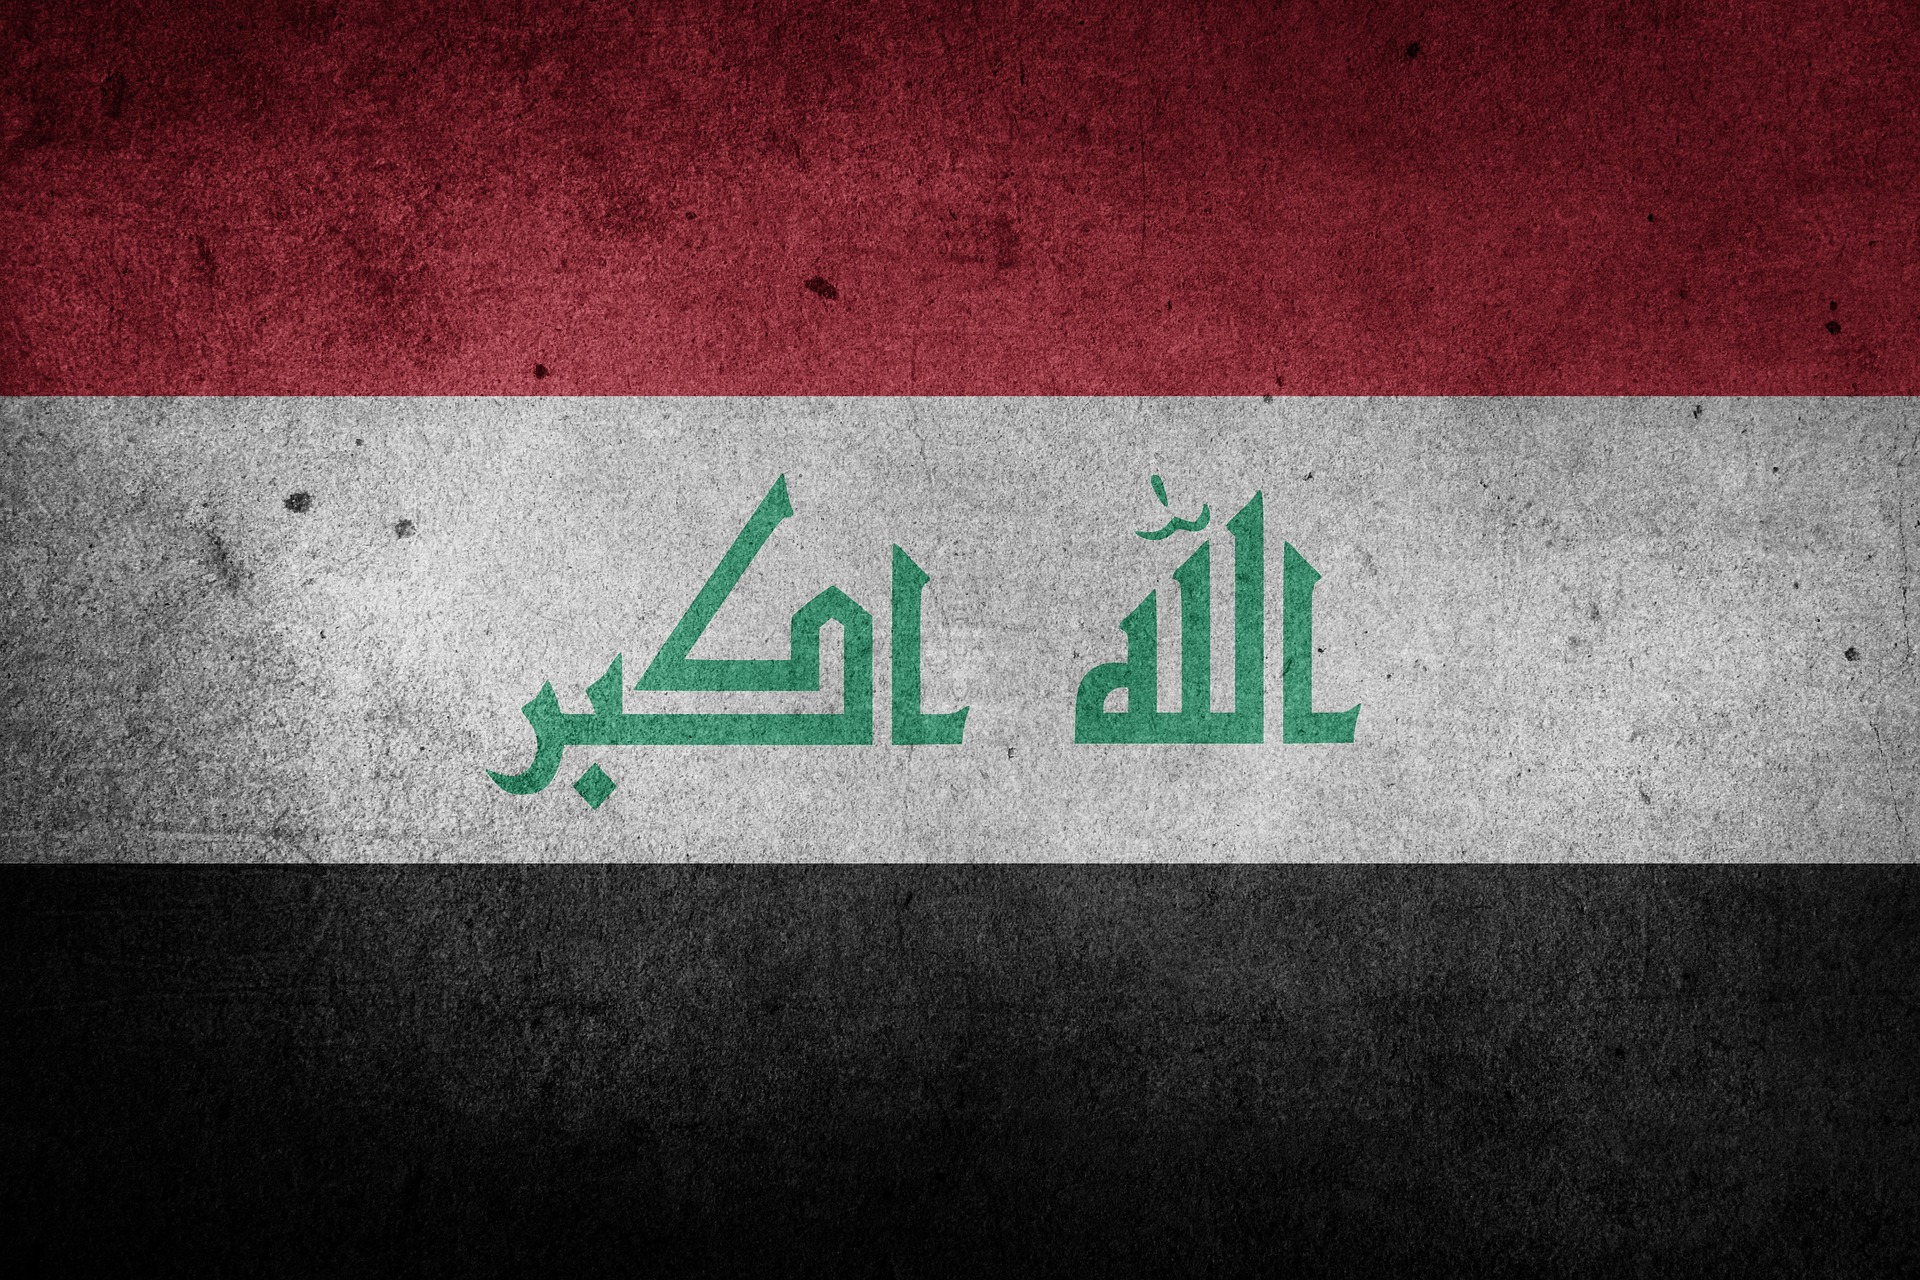 Iraqi flag (photo credit: pixabay)